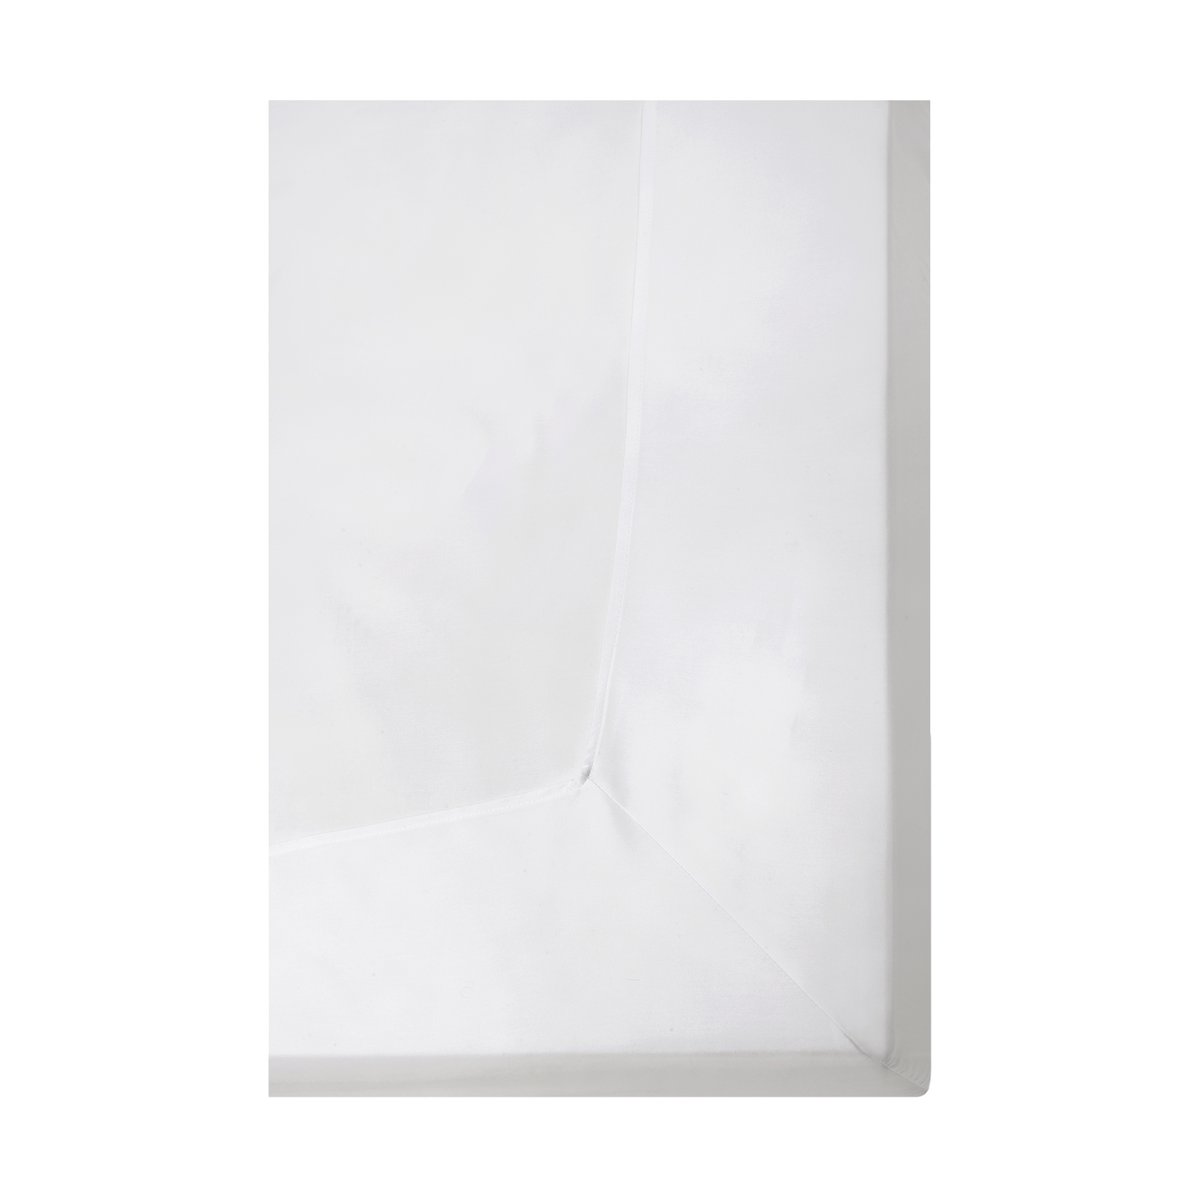 Himla Soul omslag genaaid hoeslaken 160x200 cm White